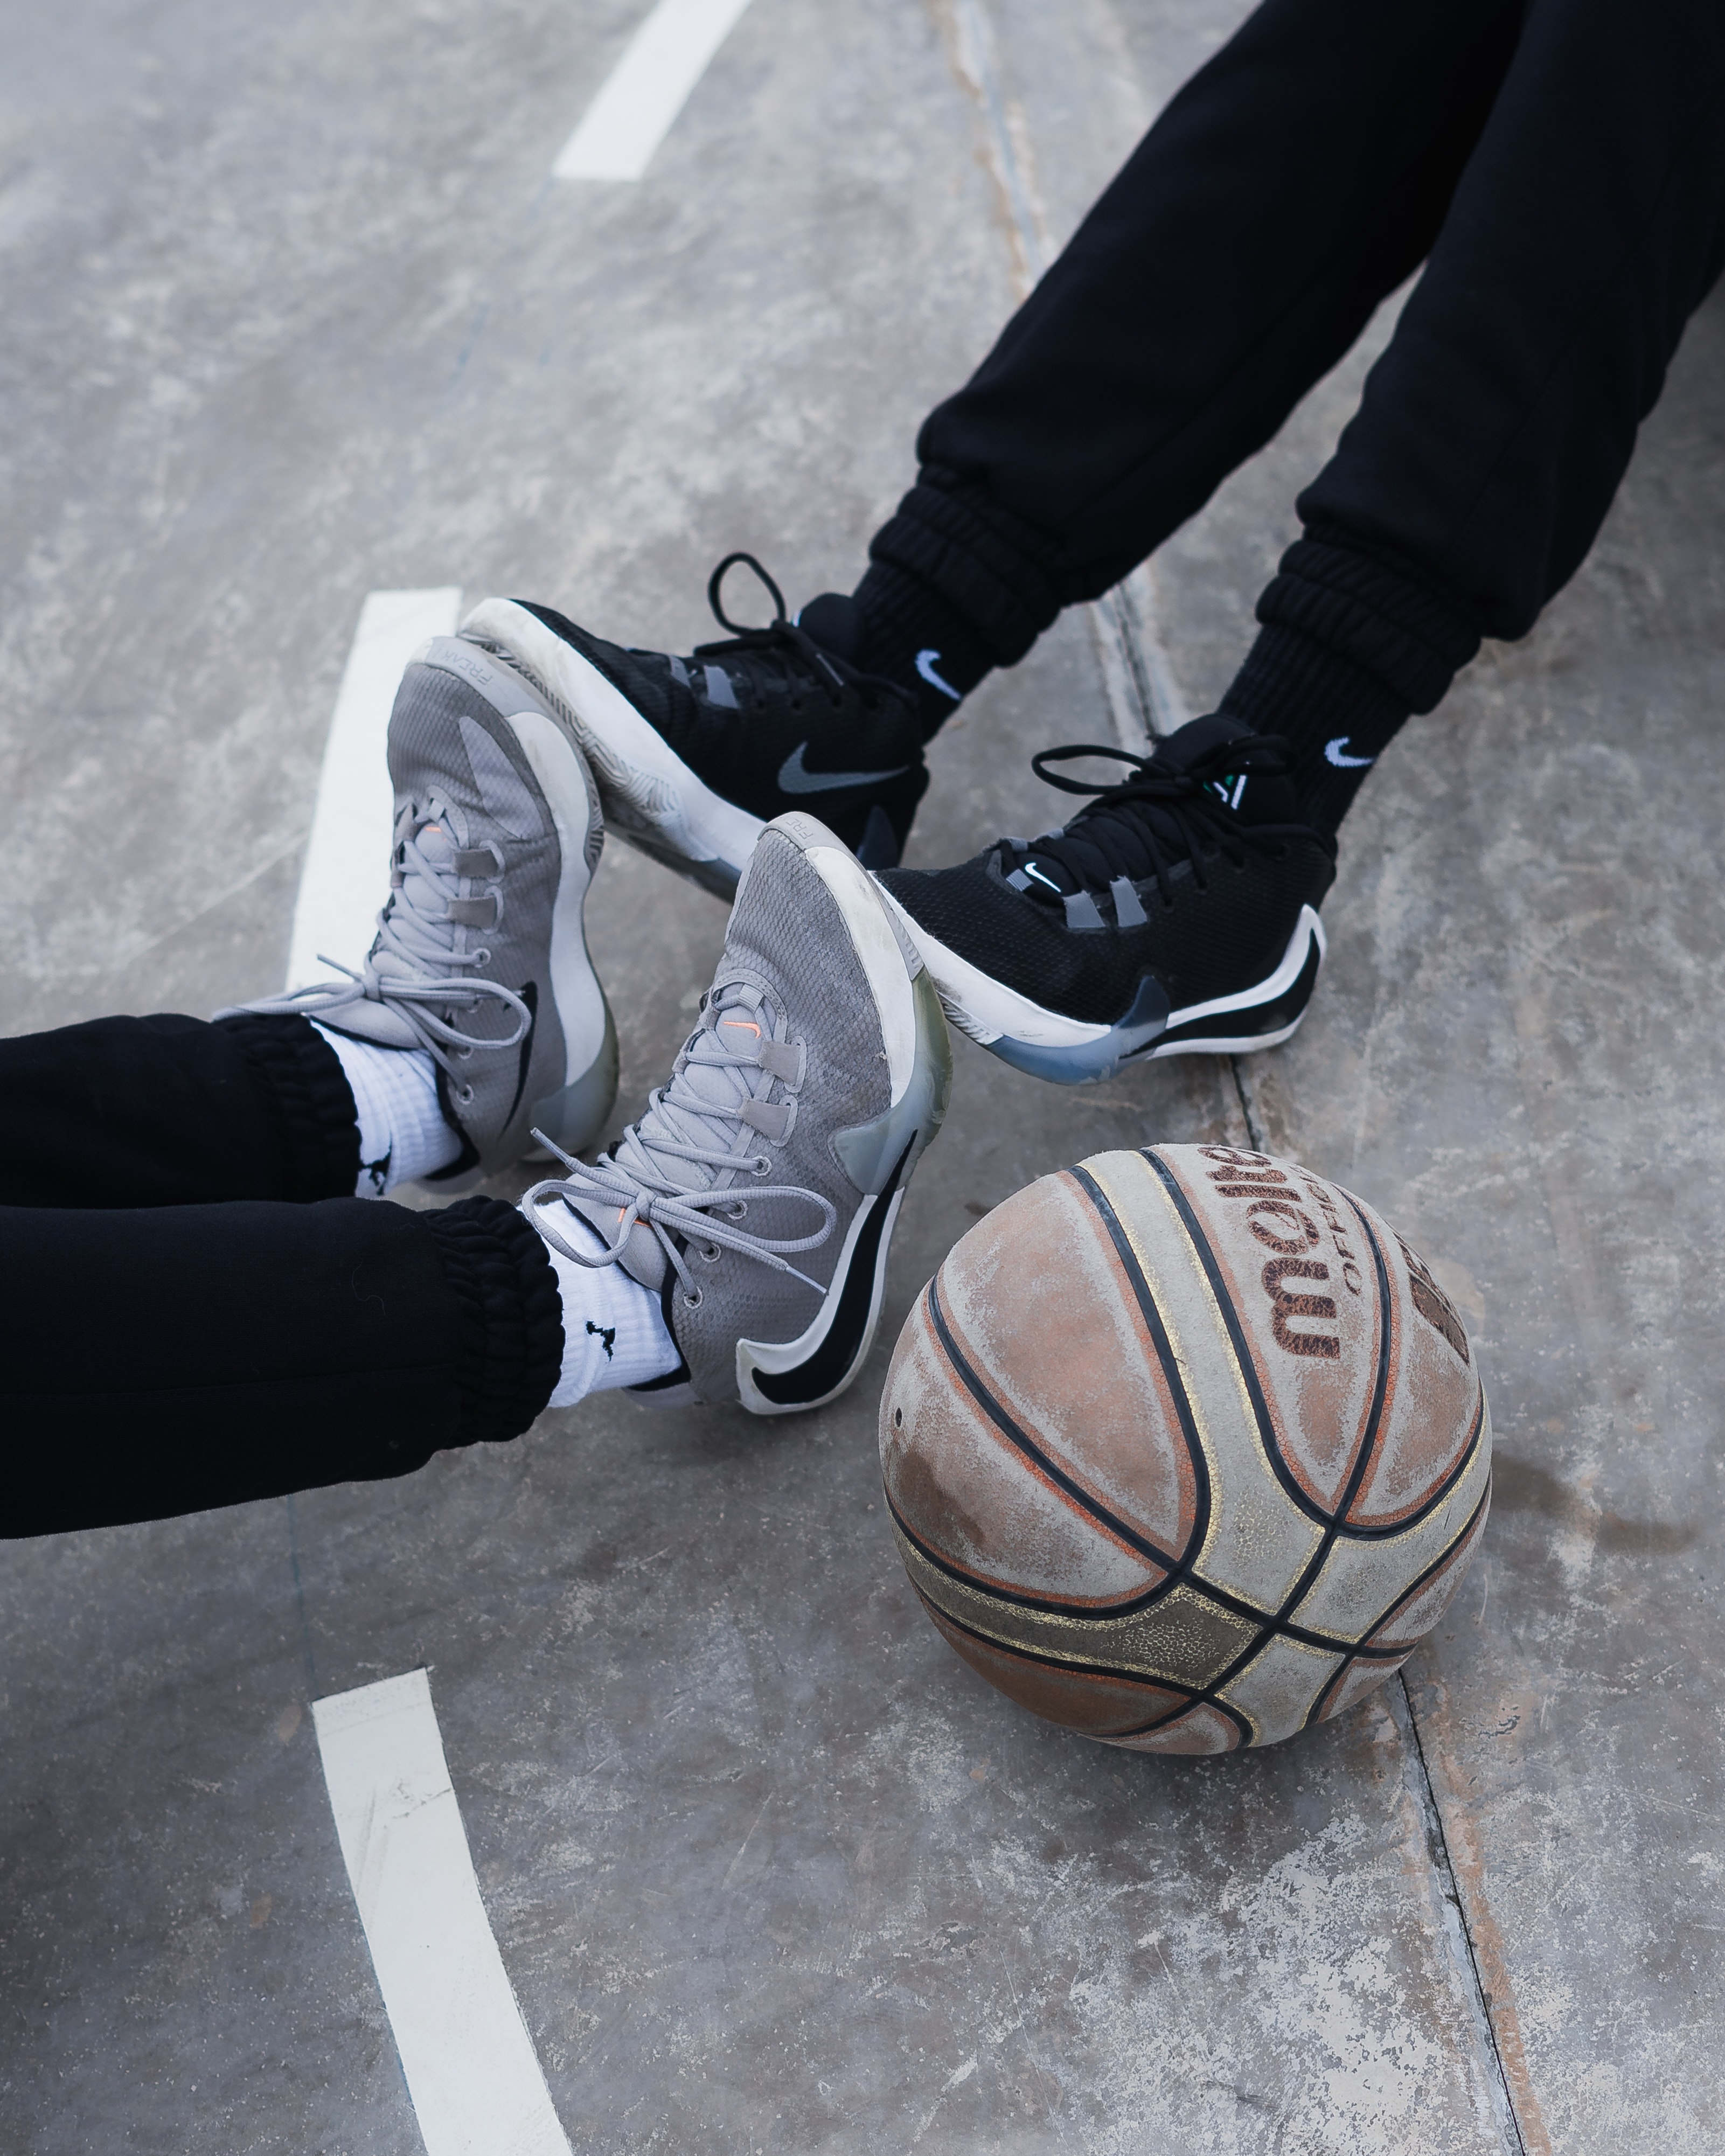 Free HD basketball, sneakers, sports, legs, ball